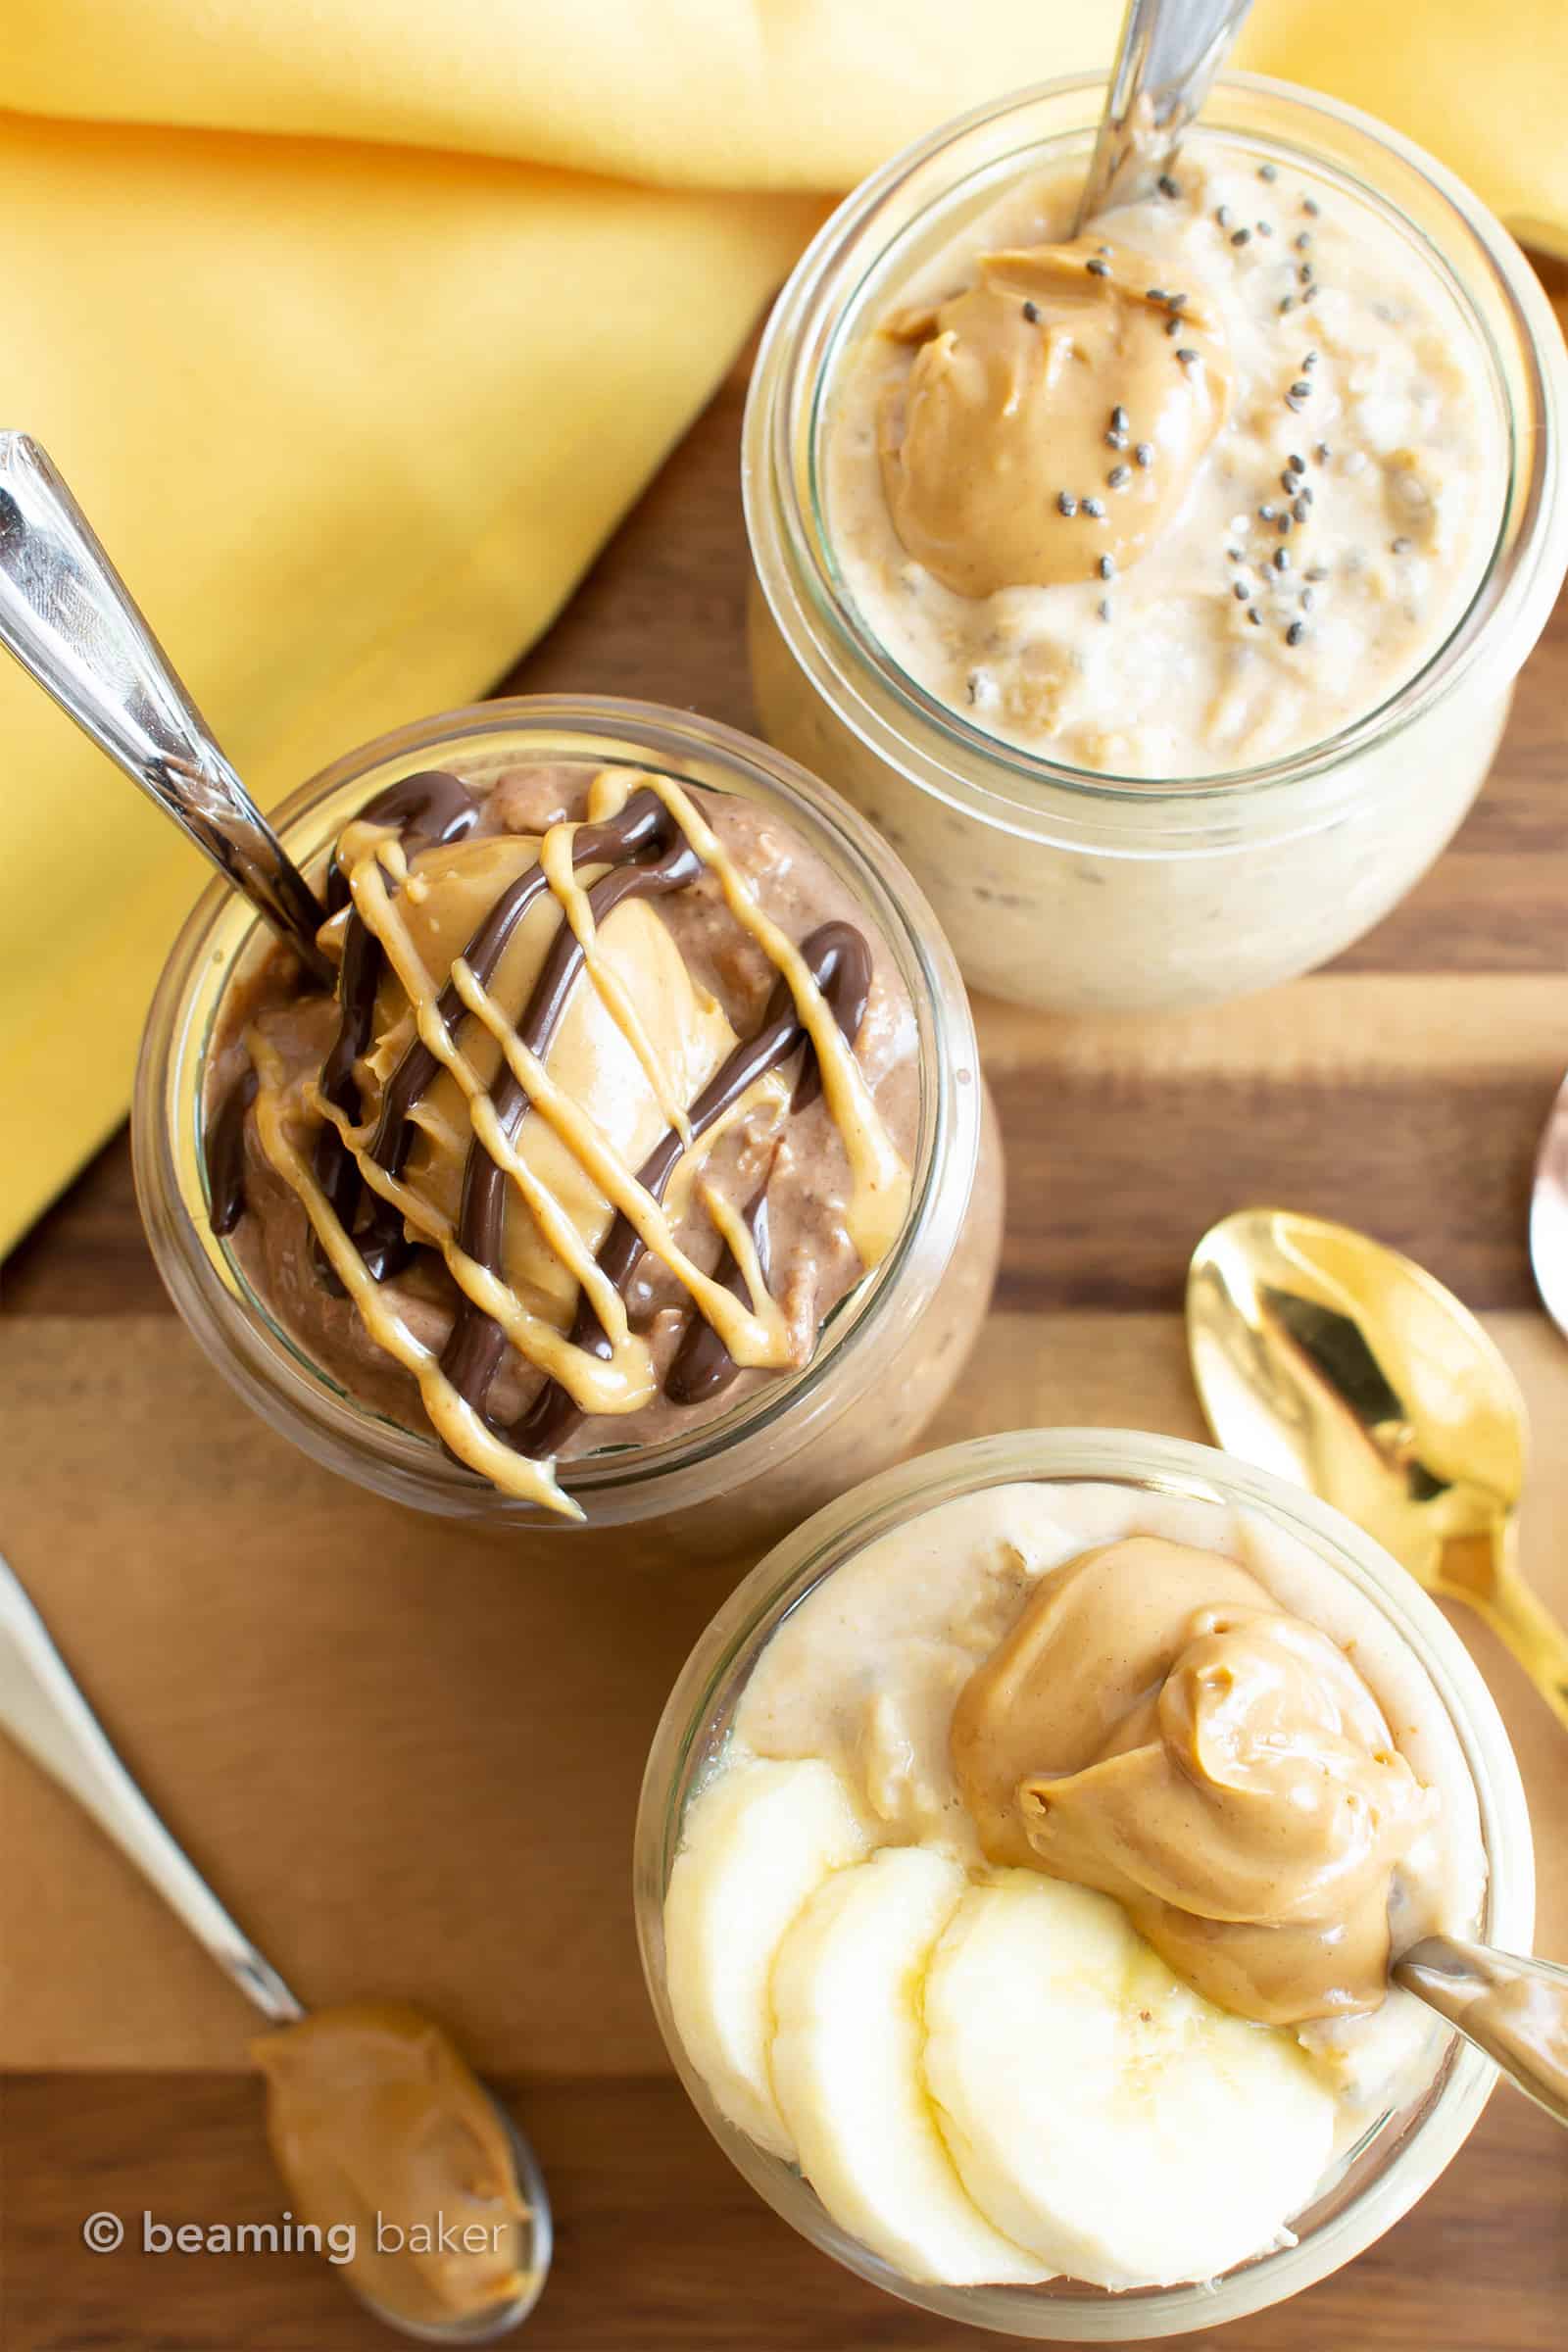 Healthy Peanut Butter Overnight Oats {3 Ways}. Learn how to make peanut butter overnight oats 3 different ways: Chocolate, Banana, and Classic PB! Easy, delicious, Vegan, Gluten-Free, Dairy-Free. #OvernightOats #PeanutButter #Breakfast #Healthy | Recipe at BeamingBaker.com